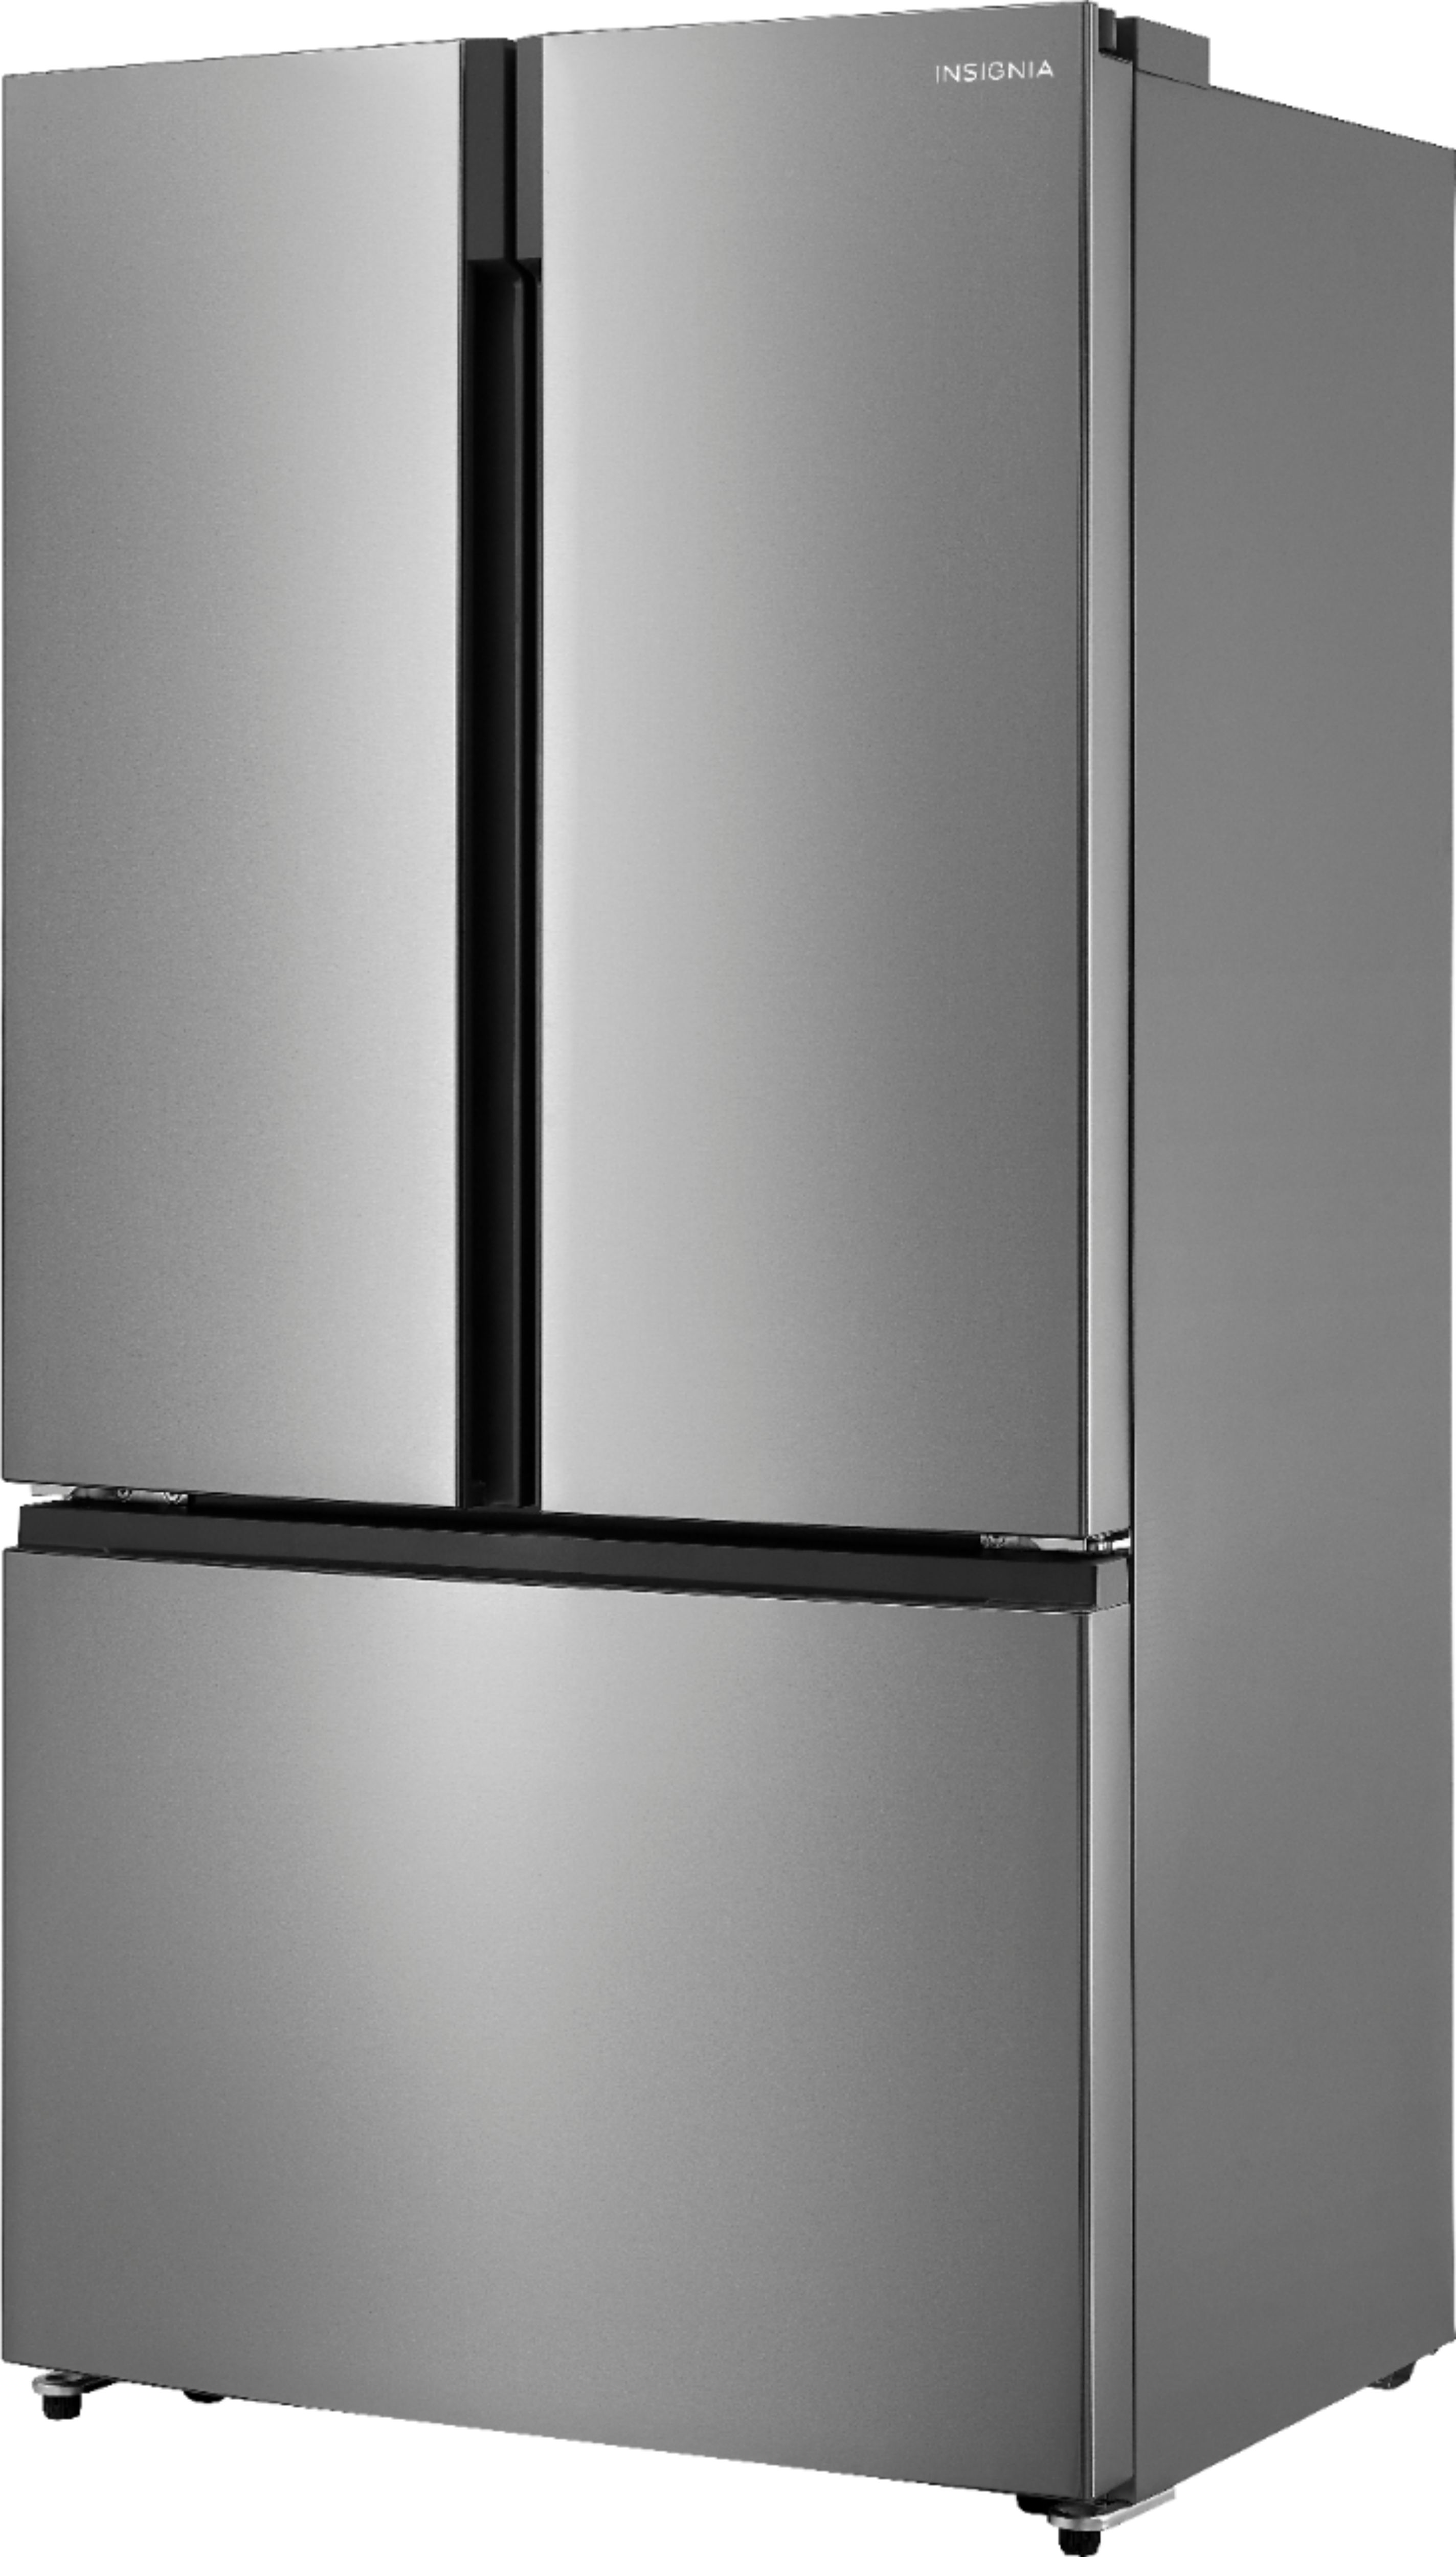 10+ Best value counter depth french door refrigerator ideas